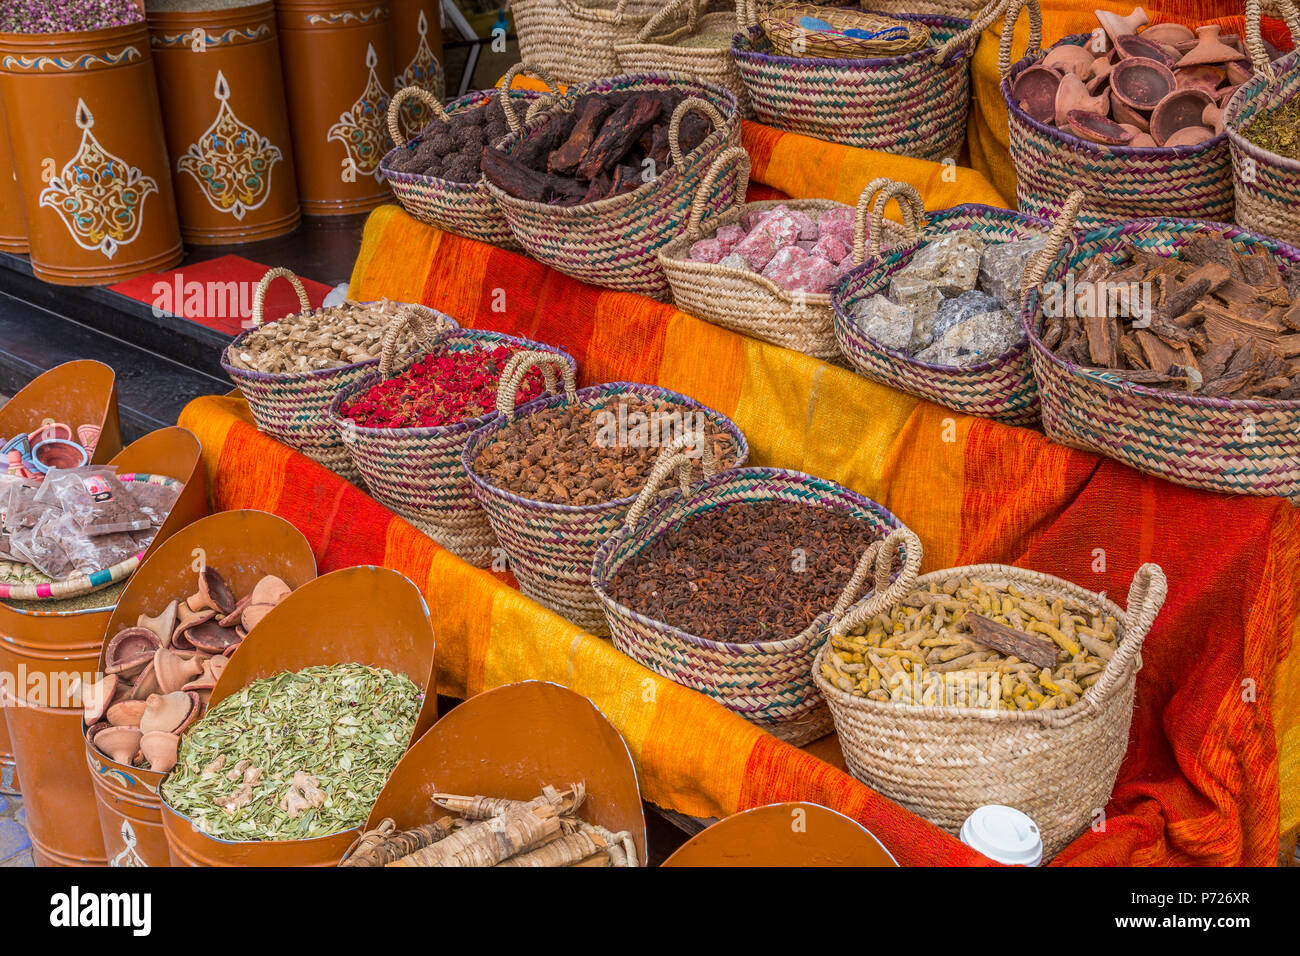 Spice Market, Souk, Mellah (Old Jewish Quarter), Marrakesh (Marrakech), Morocco, North Africa, Africa Stock Photo